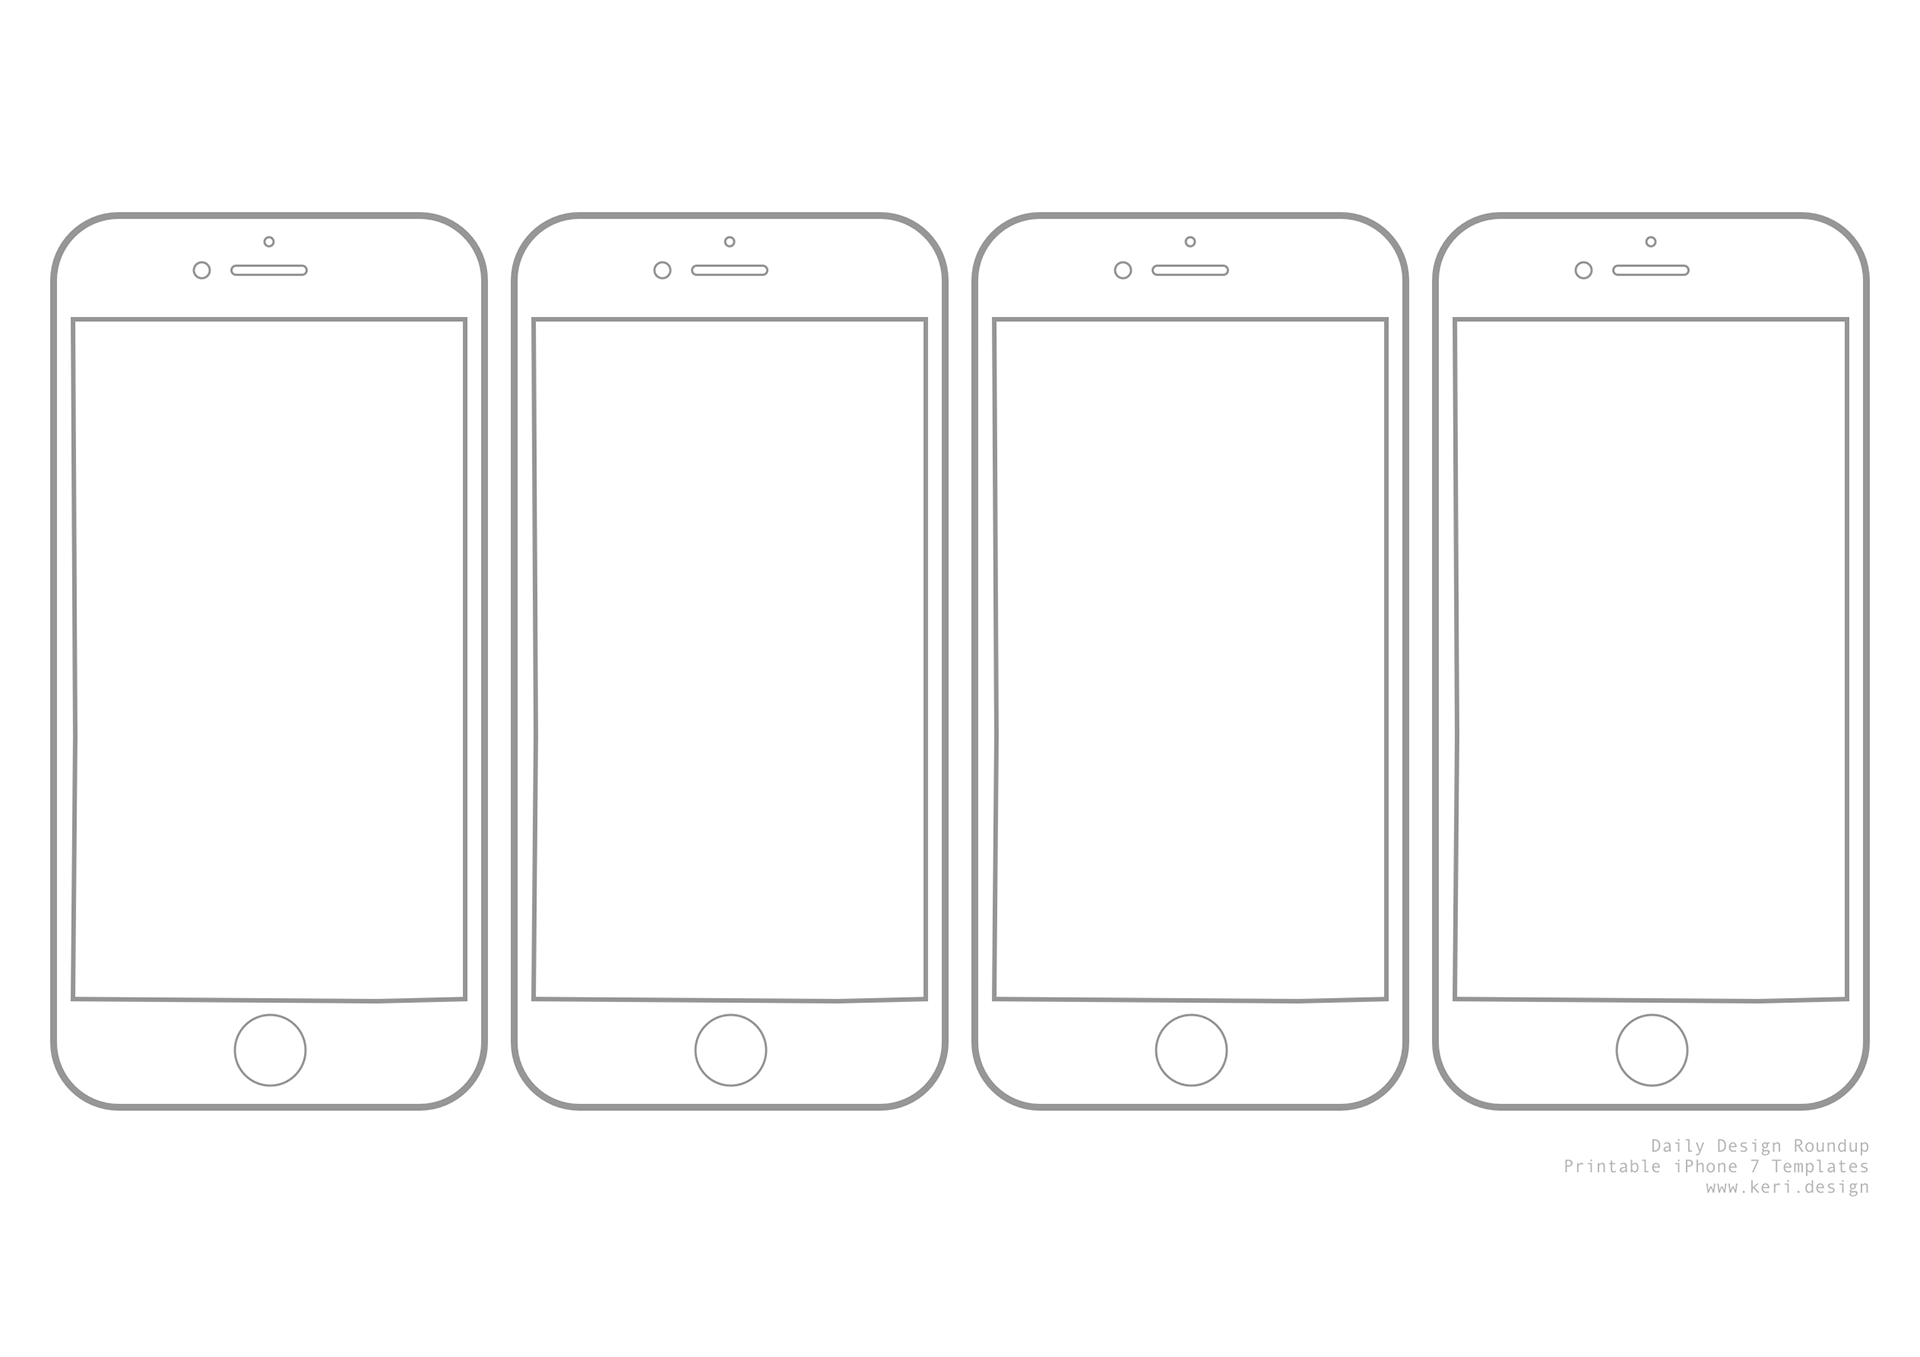 Printable iPhone 7 Templates | Behance :: Behance